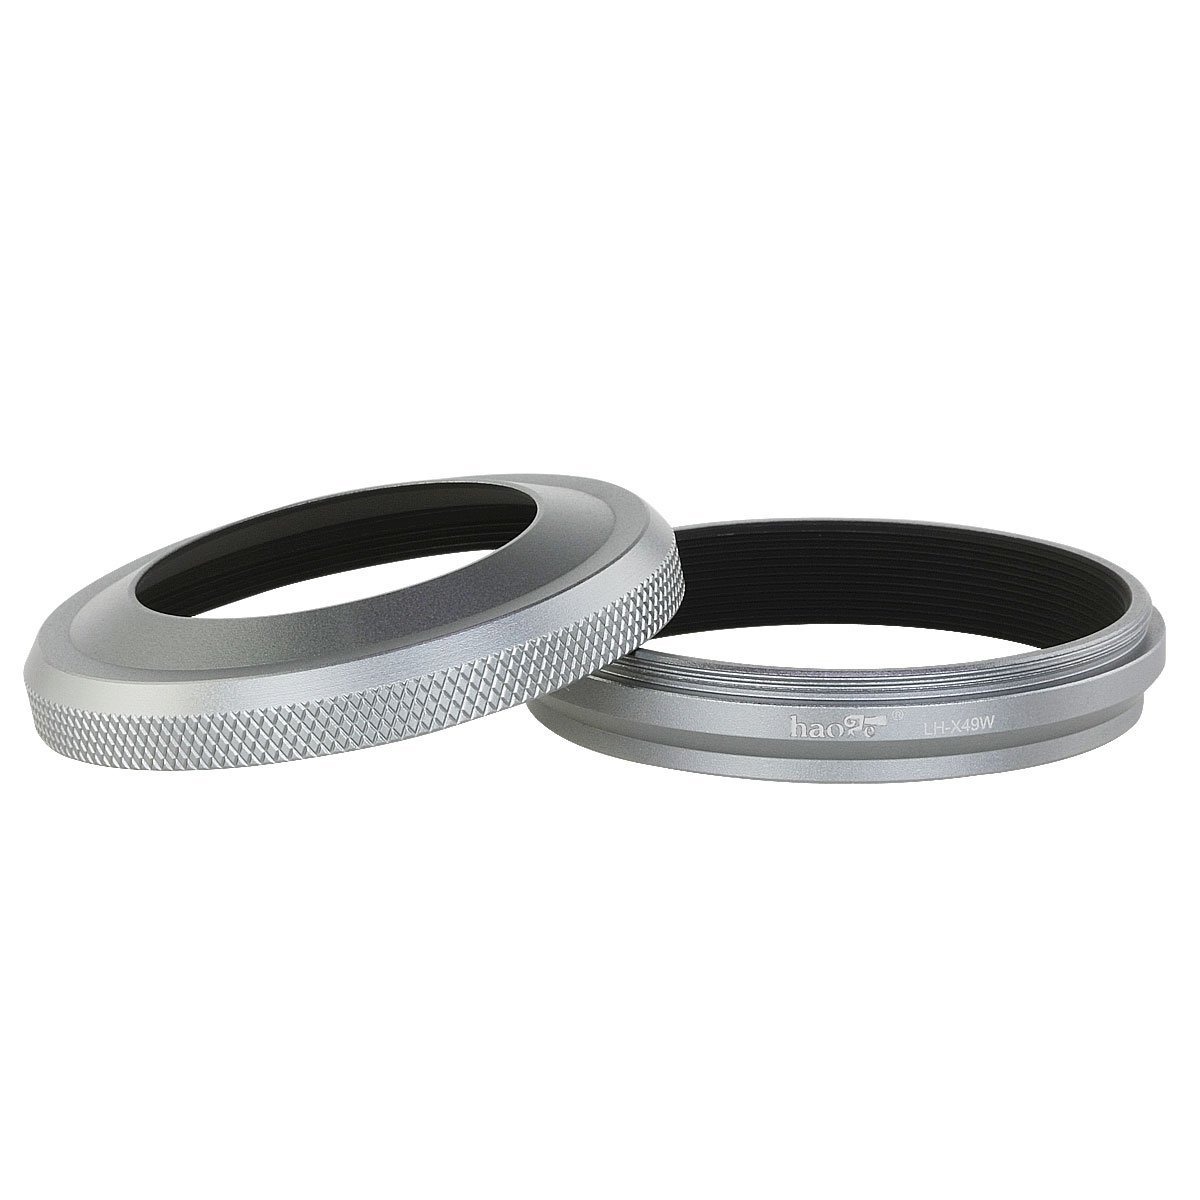 Haoge LH-X49W 2in1 All Metal Ultra-Thin Lens Hood with Adapter Ring Set for Fuji Fujifilm FinePix X70 X100 X100S X100T X100F Silver